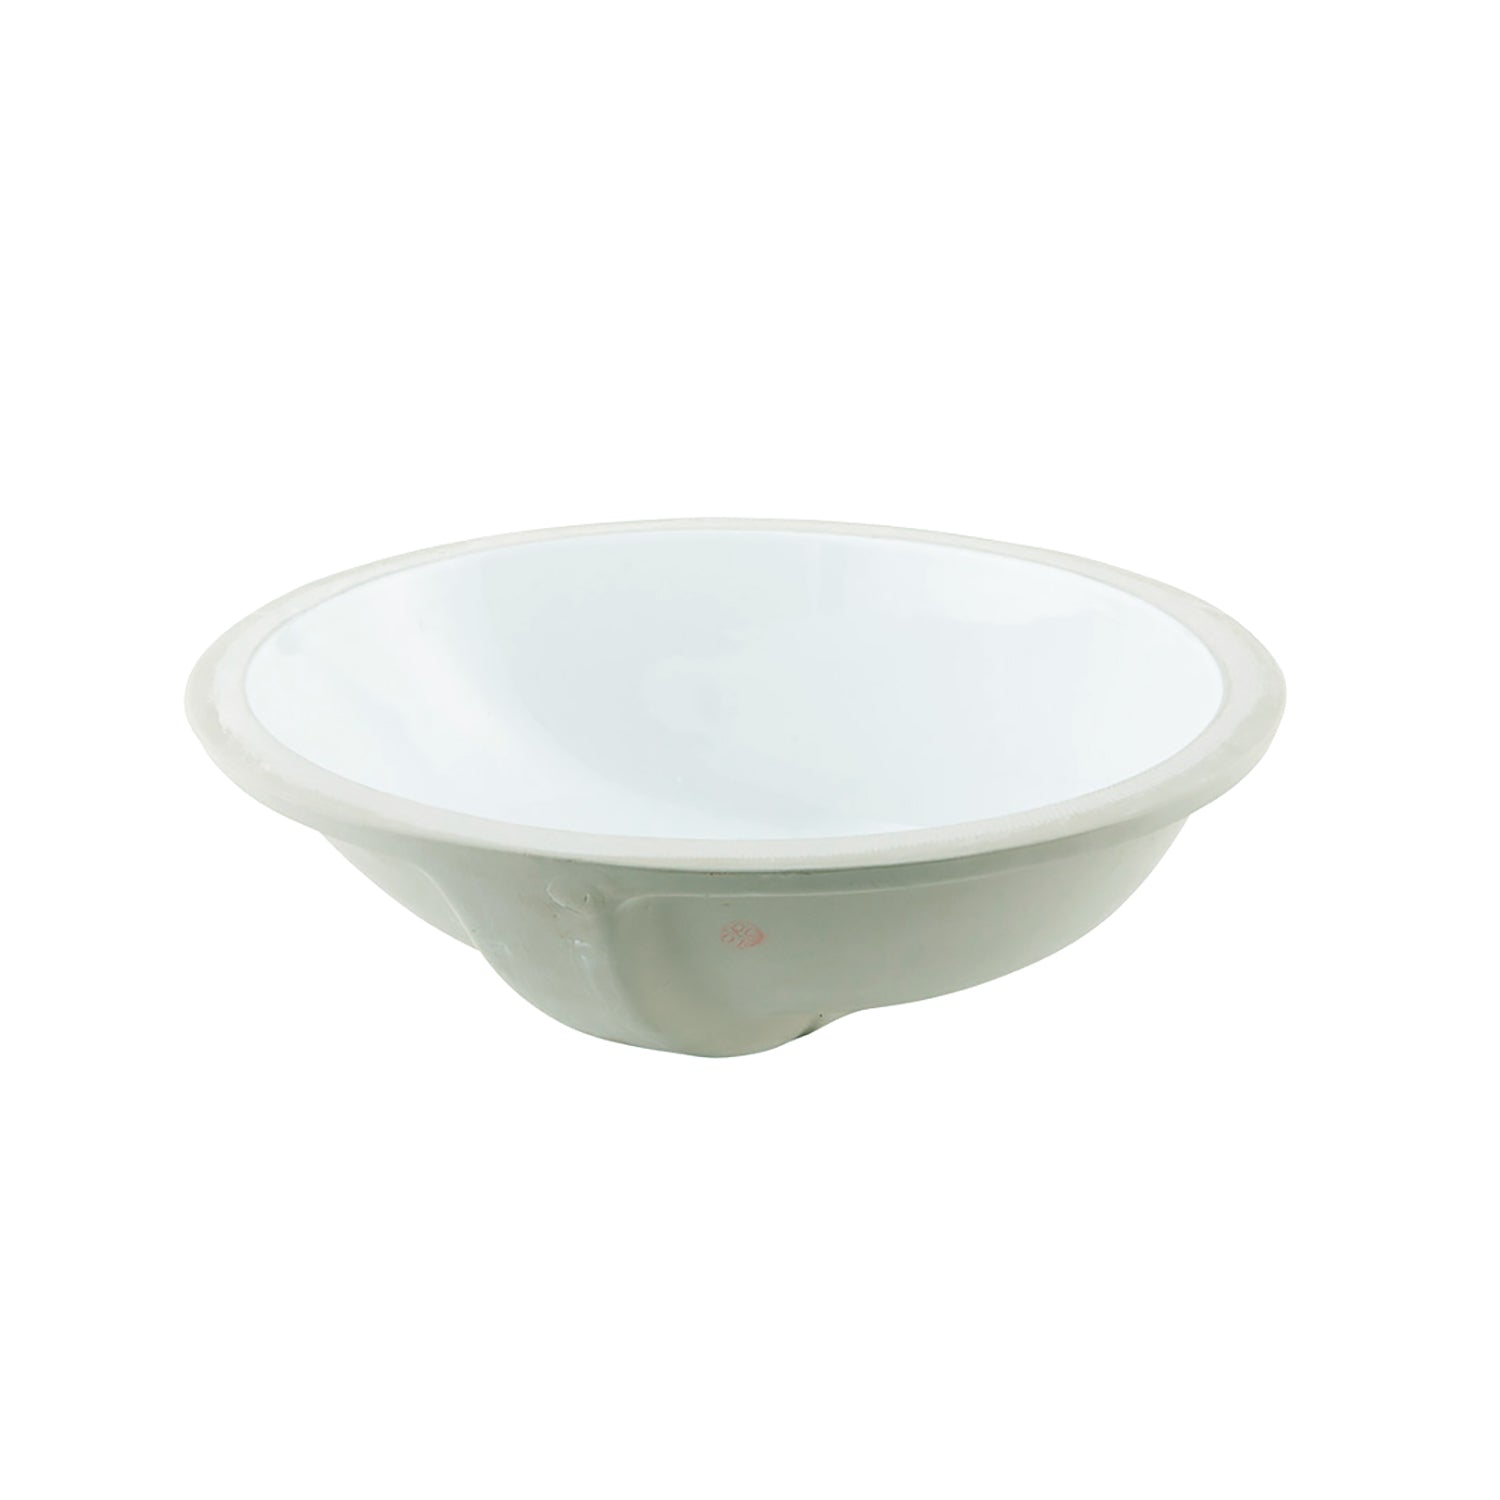 DAX Ceramic Oval Single Bowl Undermount Bathroom Sink, White Finish, 19-1/2 x 16 x 8 Inches (BSN-200)